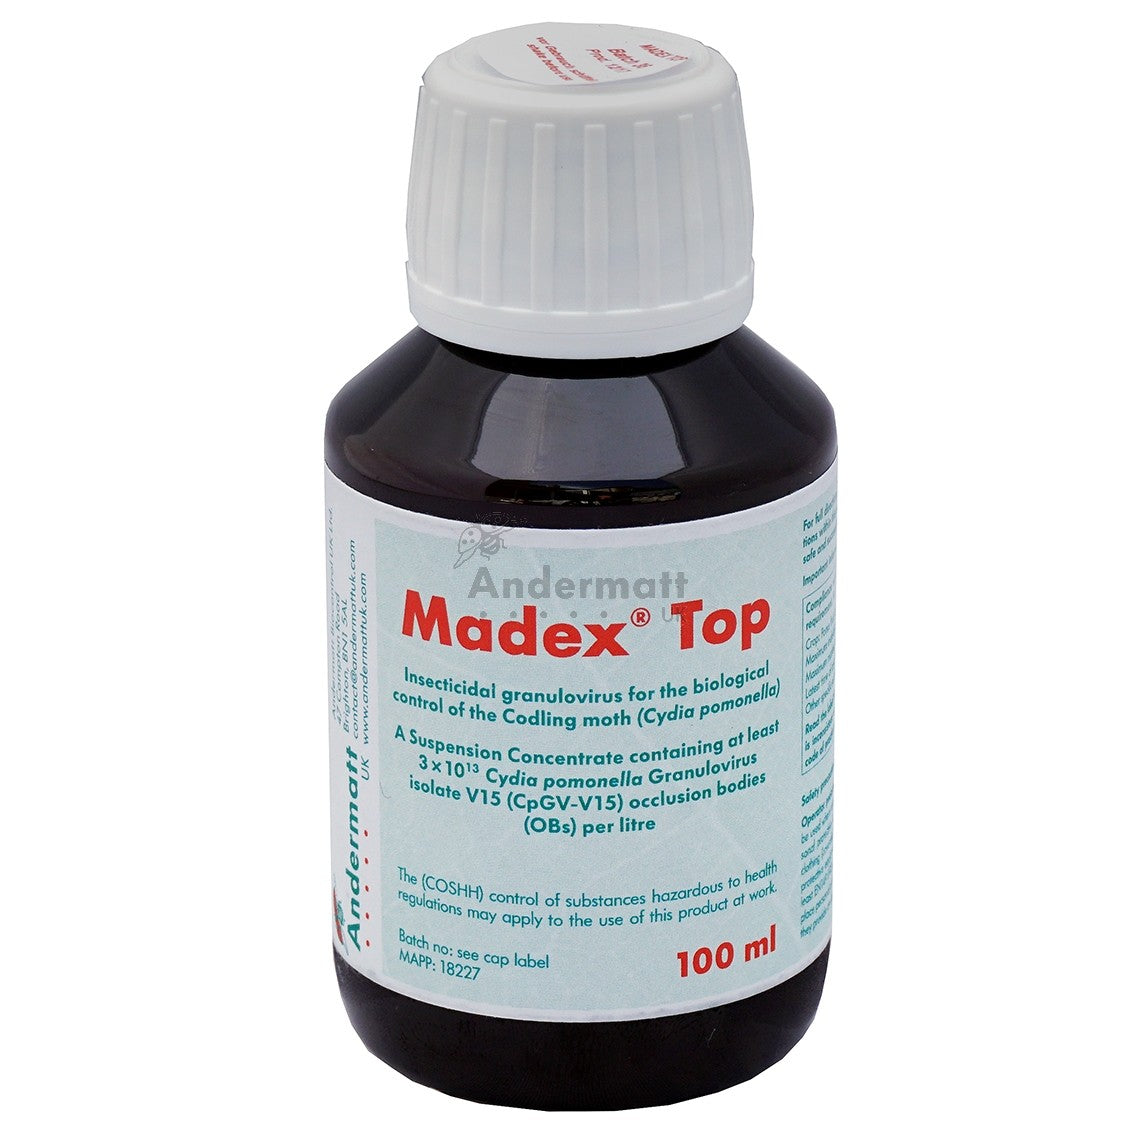 Madex® Top